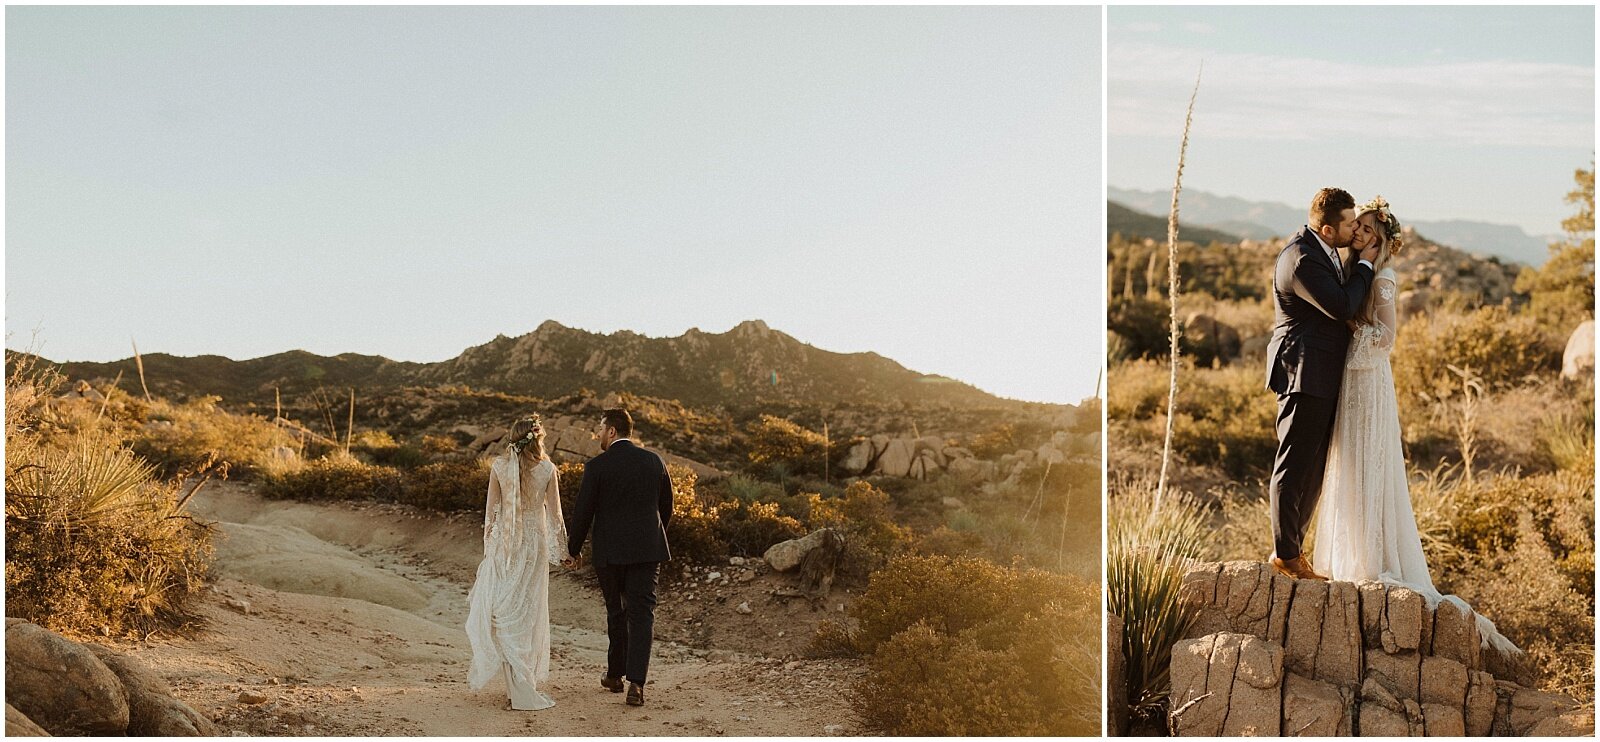 desert bridal session - erika greene photography - arizona couples photographer_0023.jpg